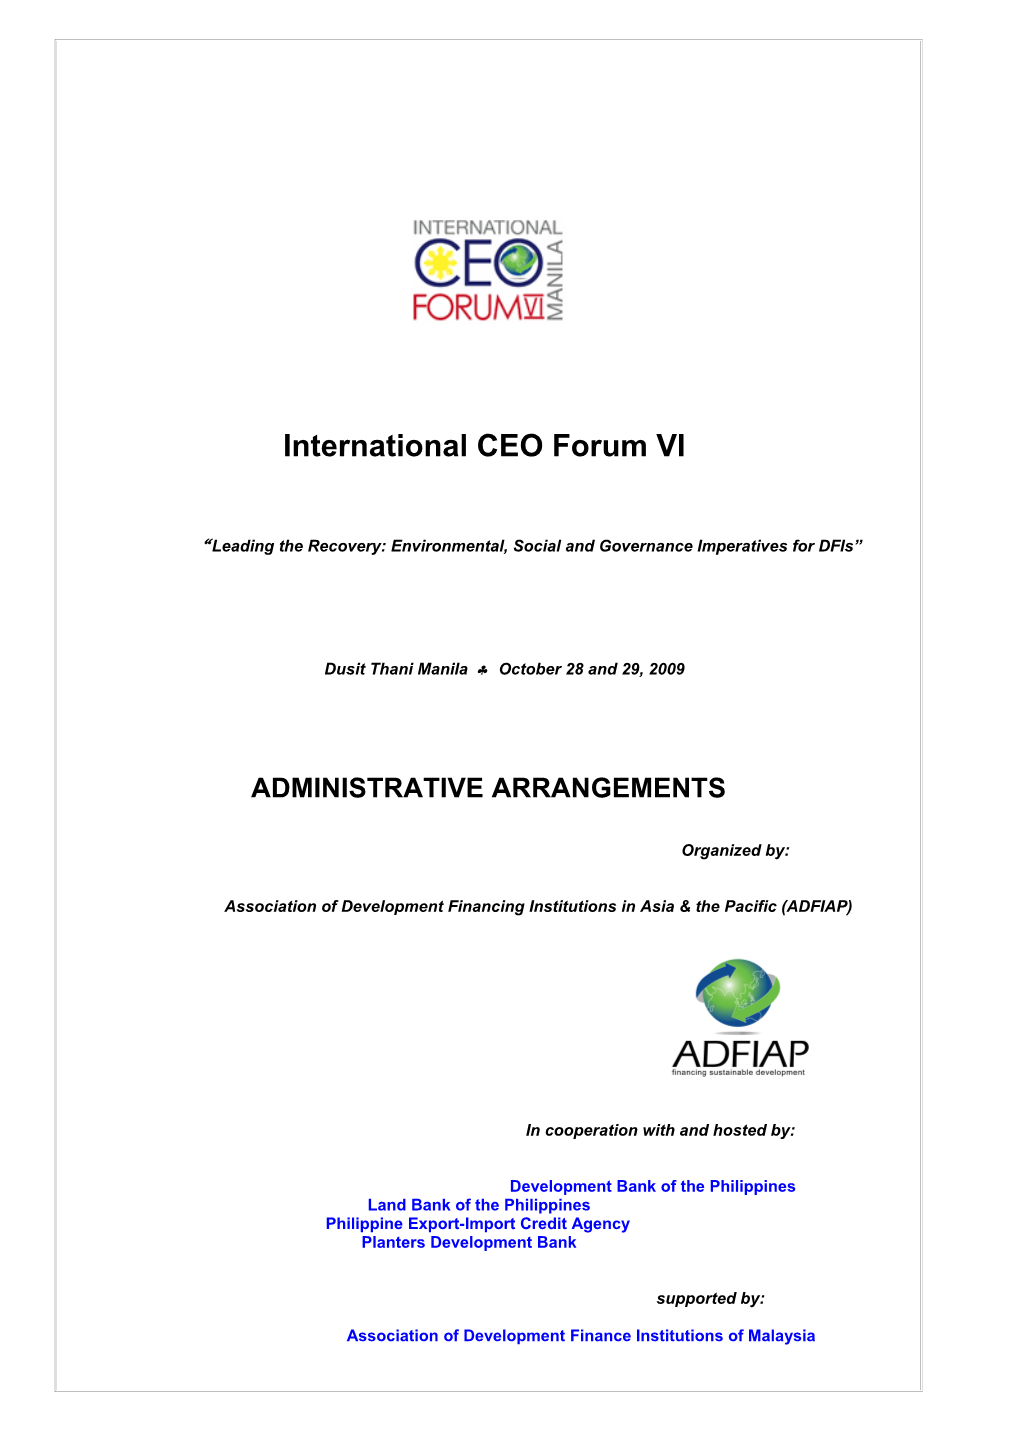 Schedute Meeting Seminar of Adfiap CEO Forum IV